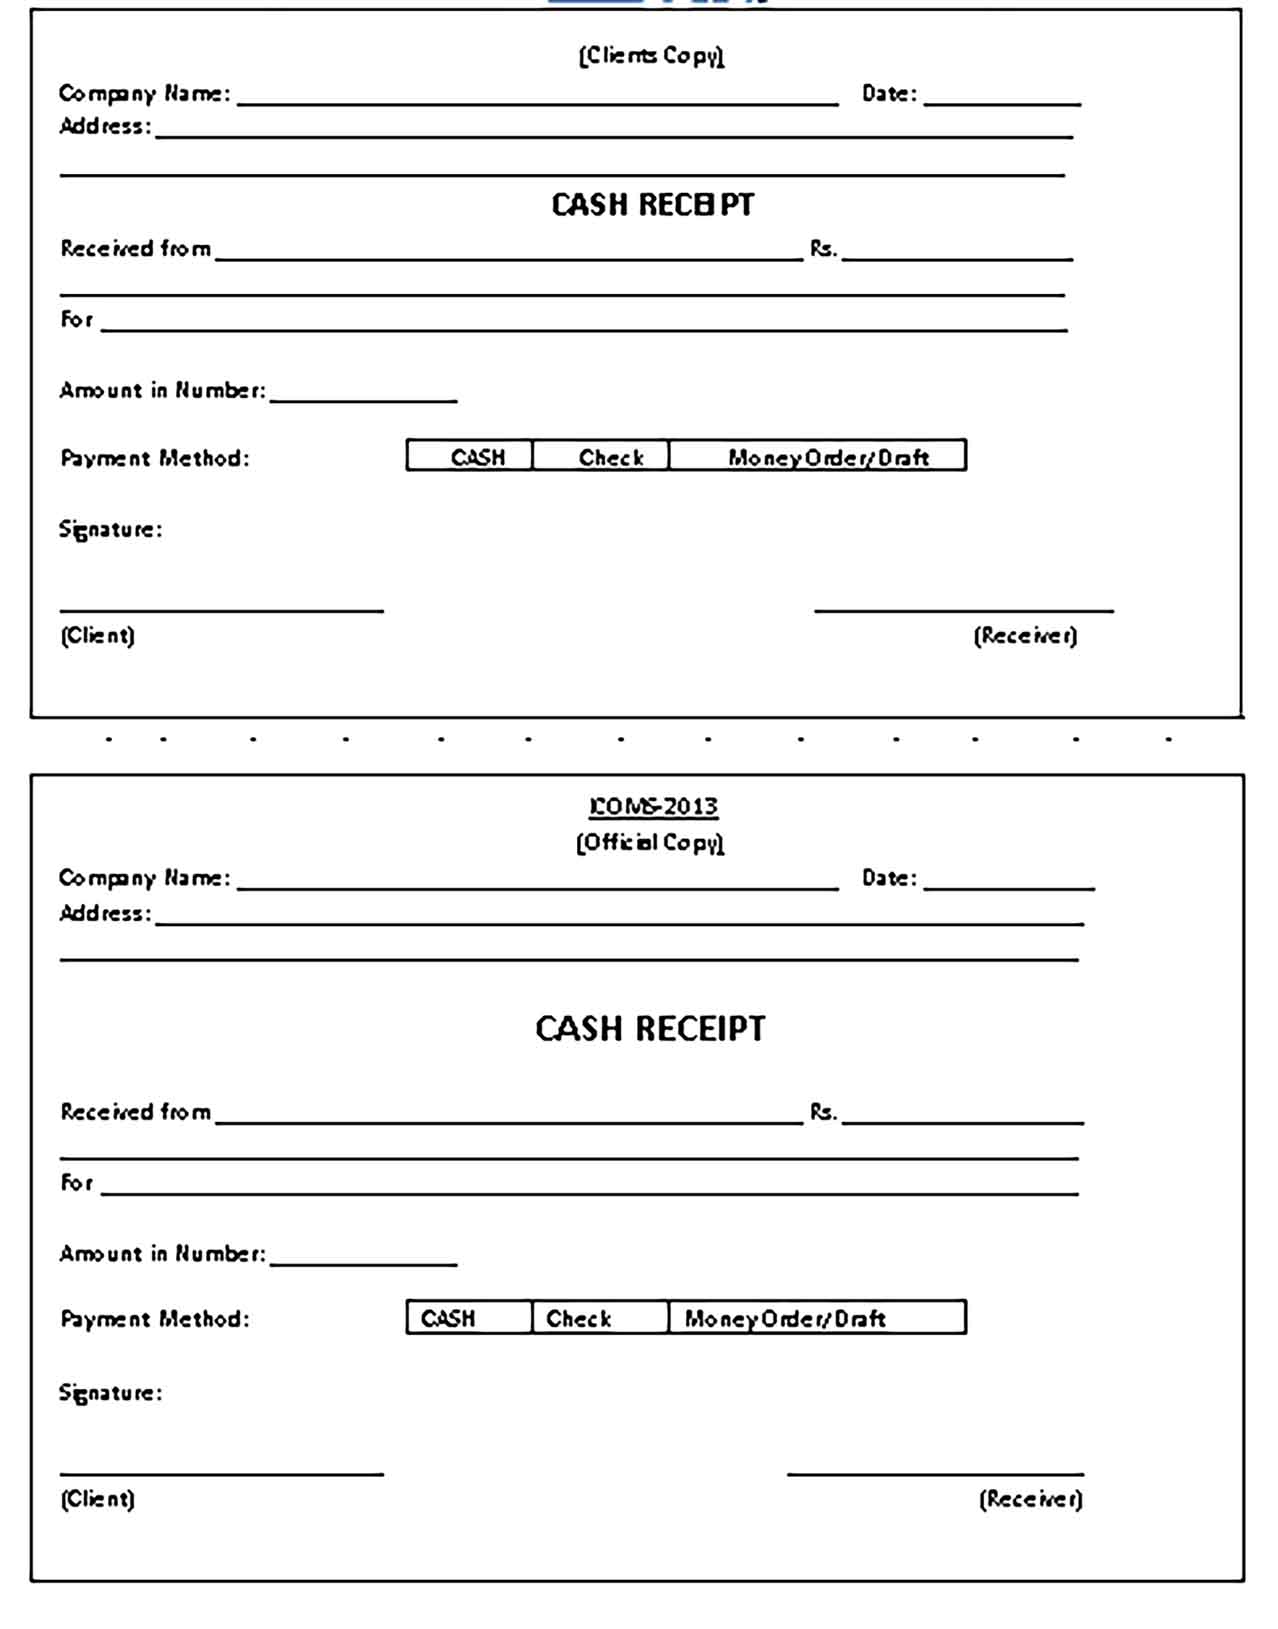 Sample Printable Cash Receipt Templates